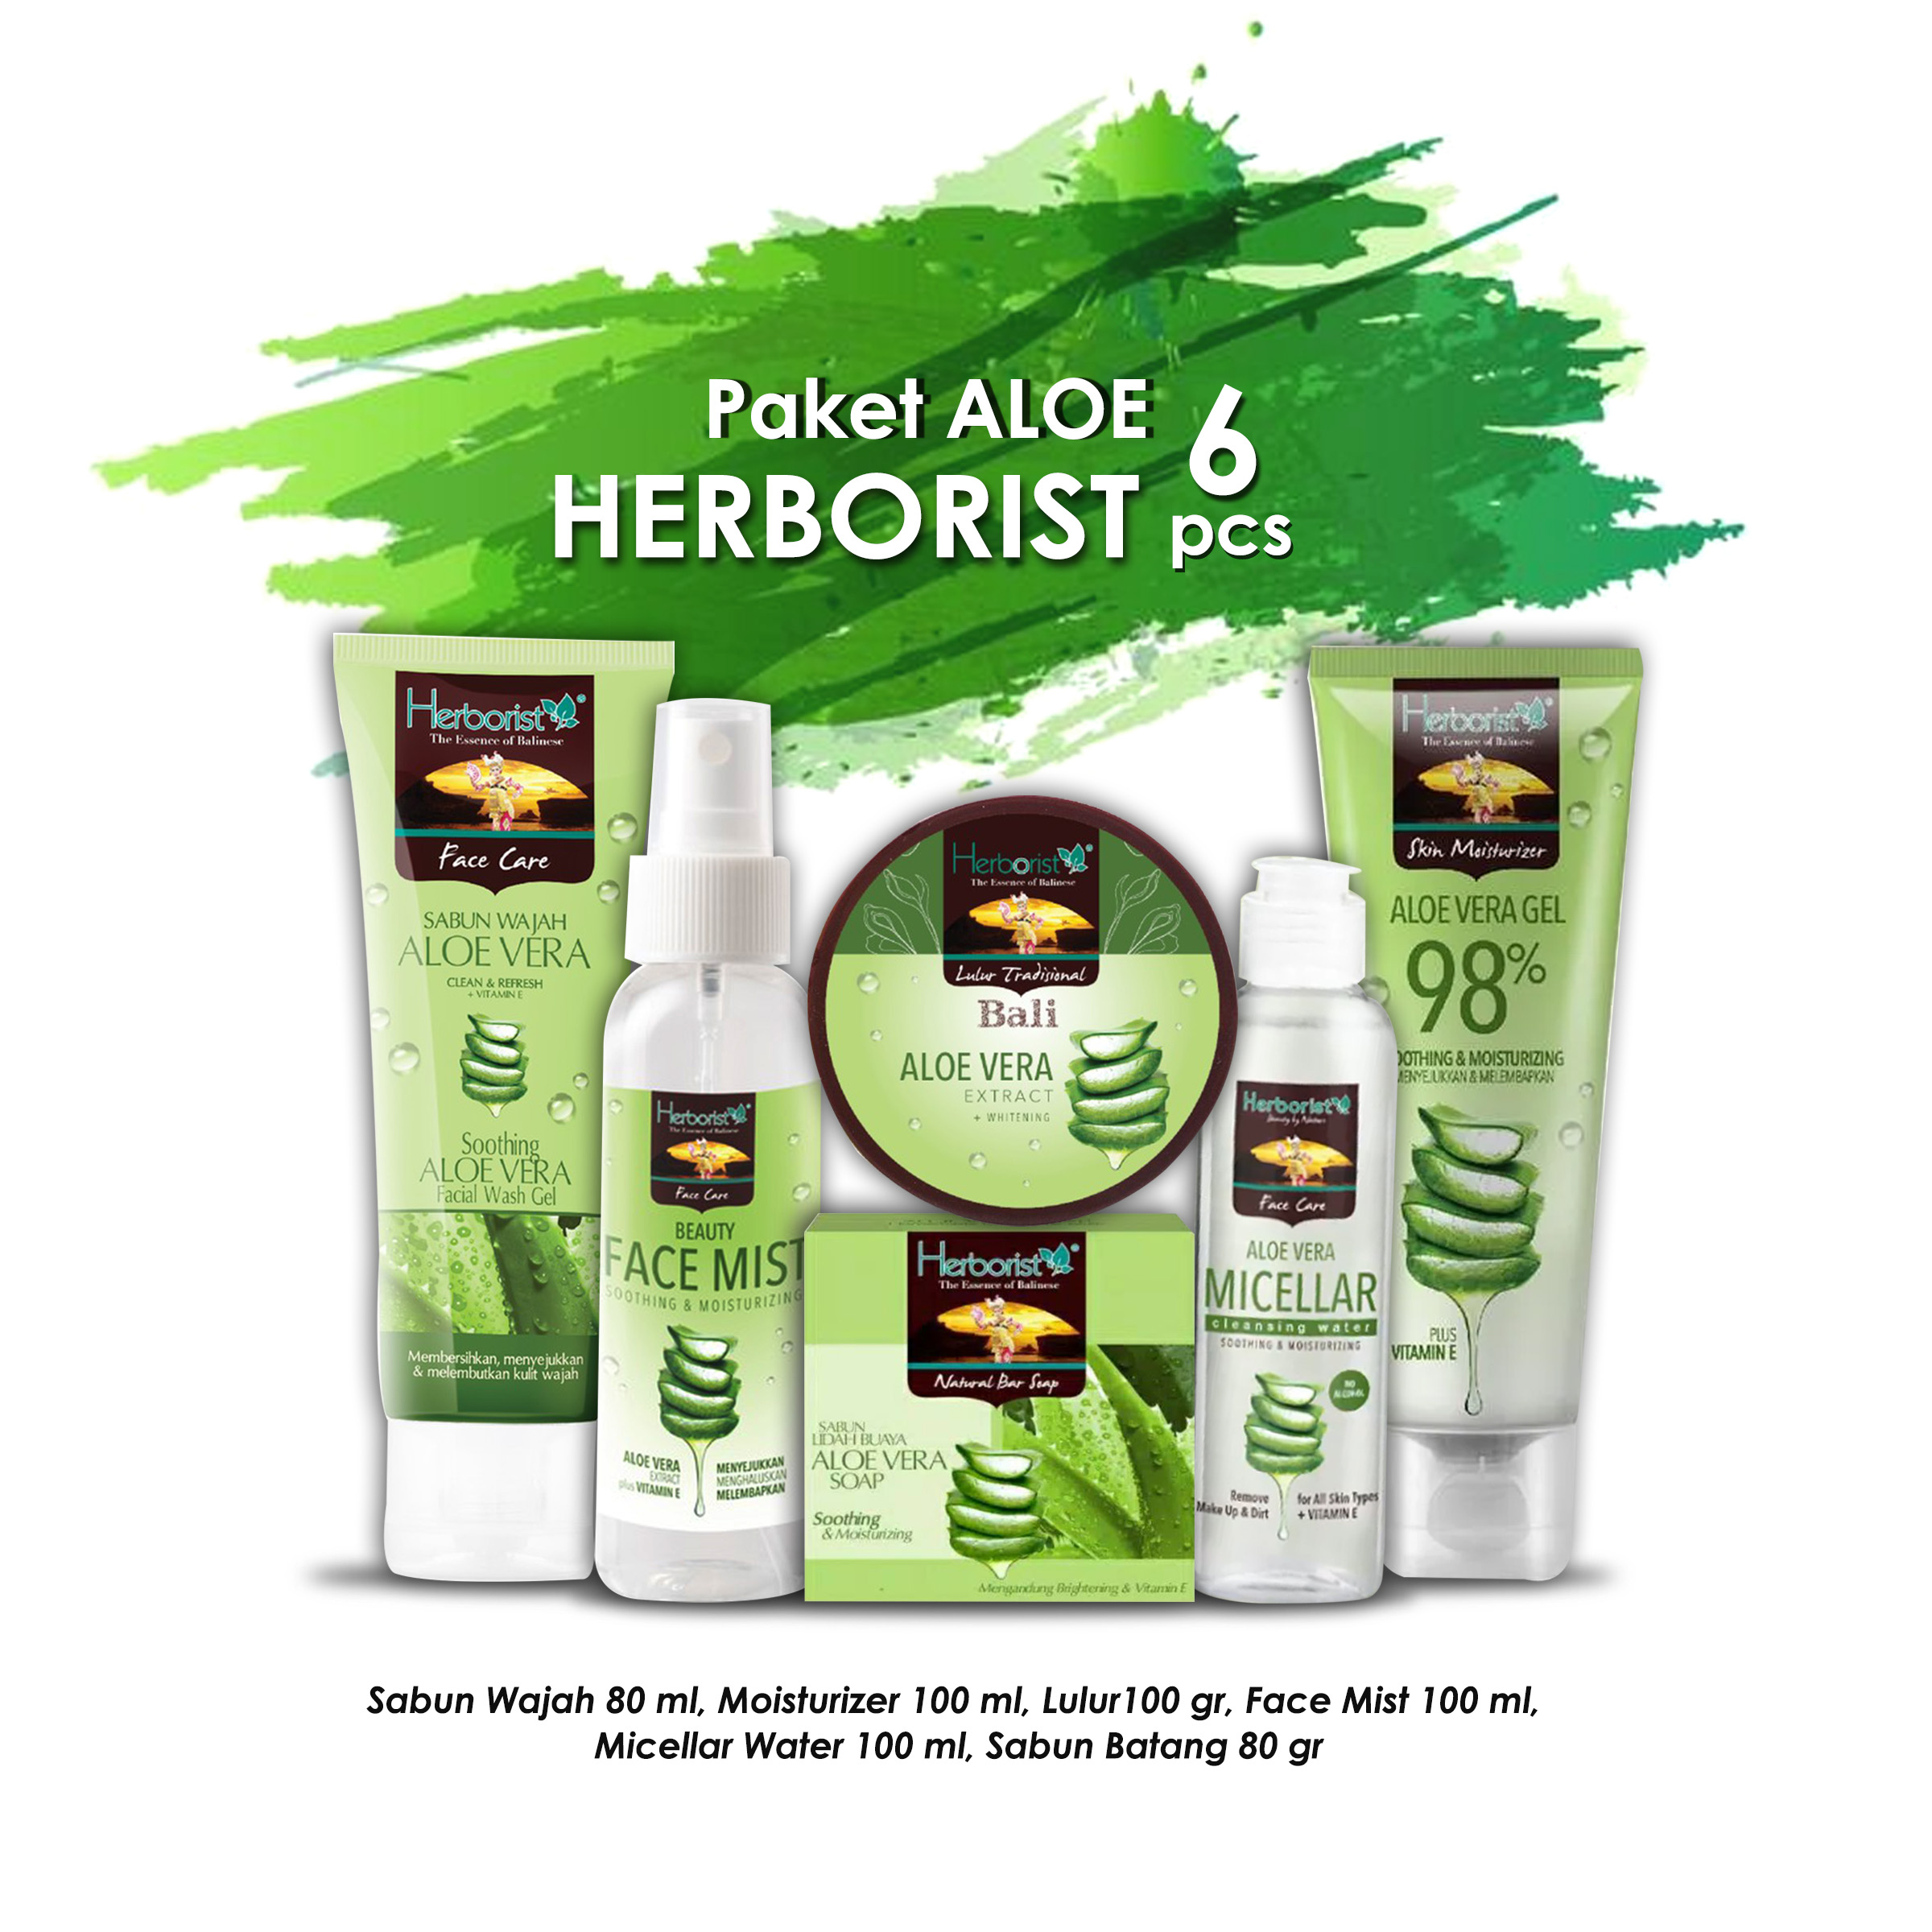 Paket Herborist Aloevera 6 pcs (Sabun Wajah 80 ml, Moisturizer 100 ml, Lulur100 gr, Face Mist 100 ml, Micellar Water 100 ml, Sabun Batang 80 gr)